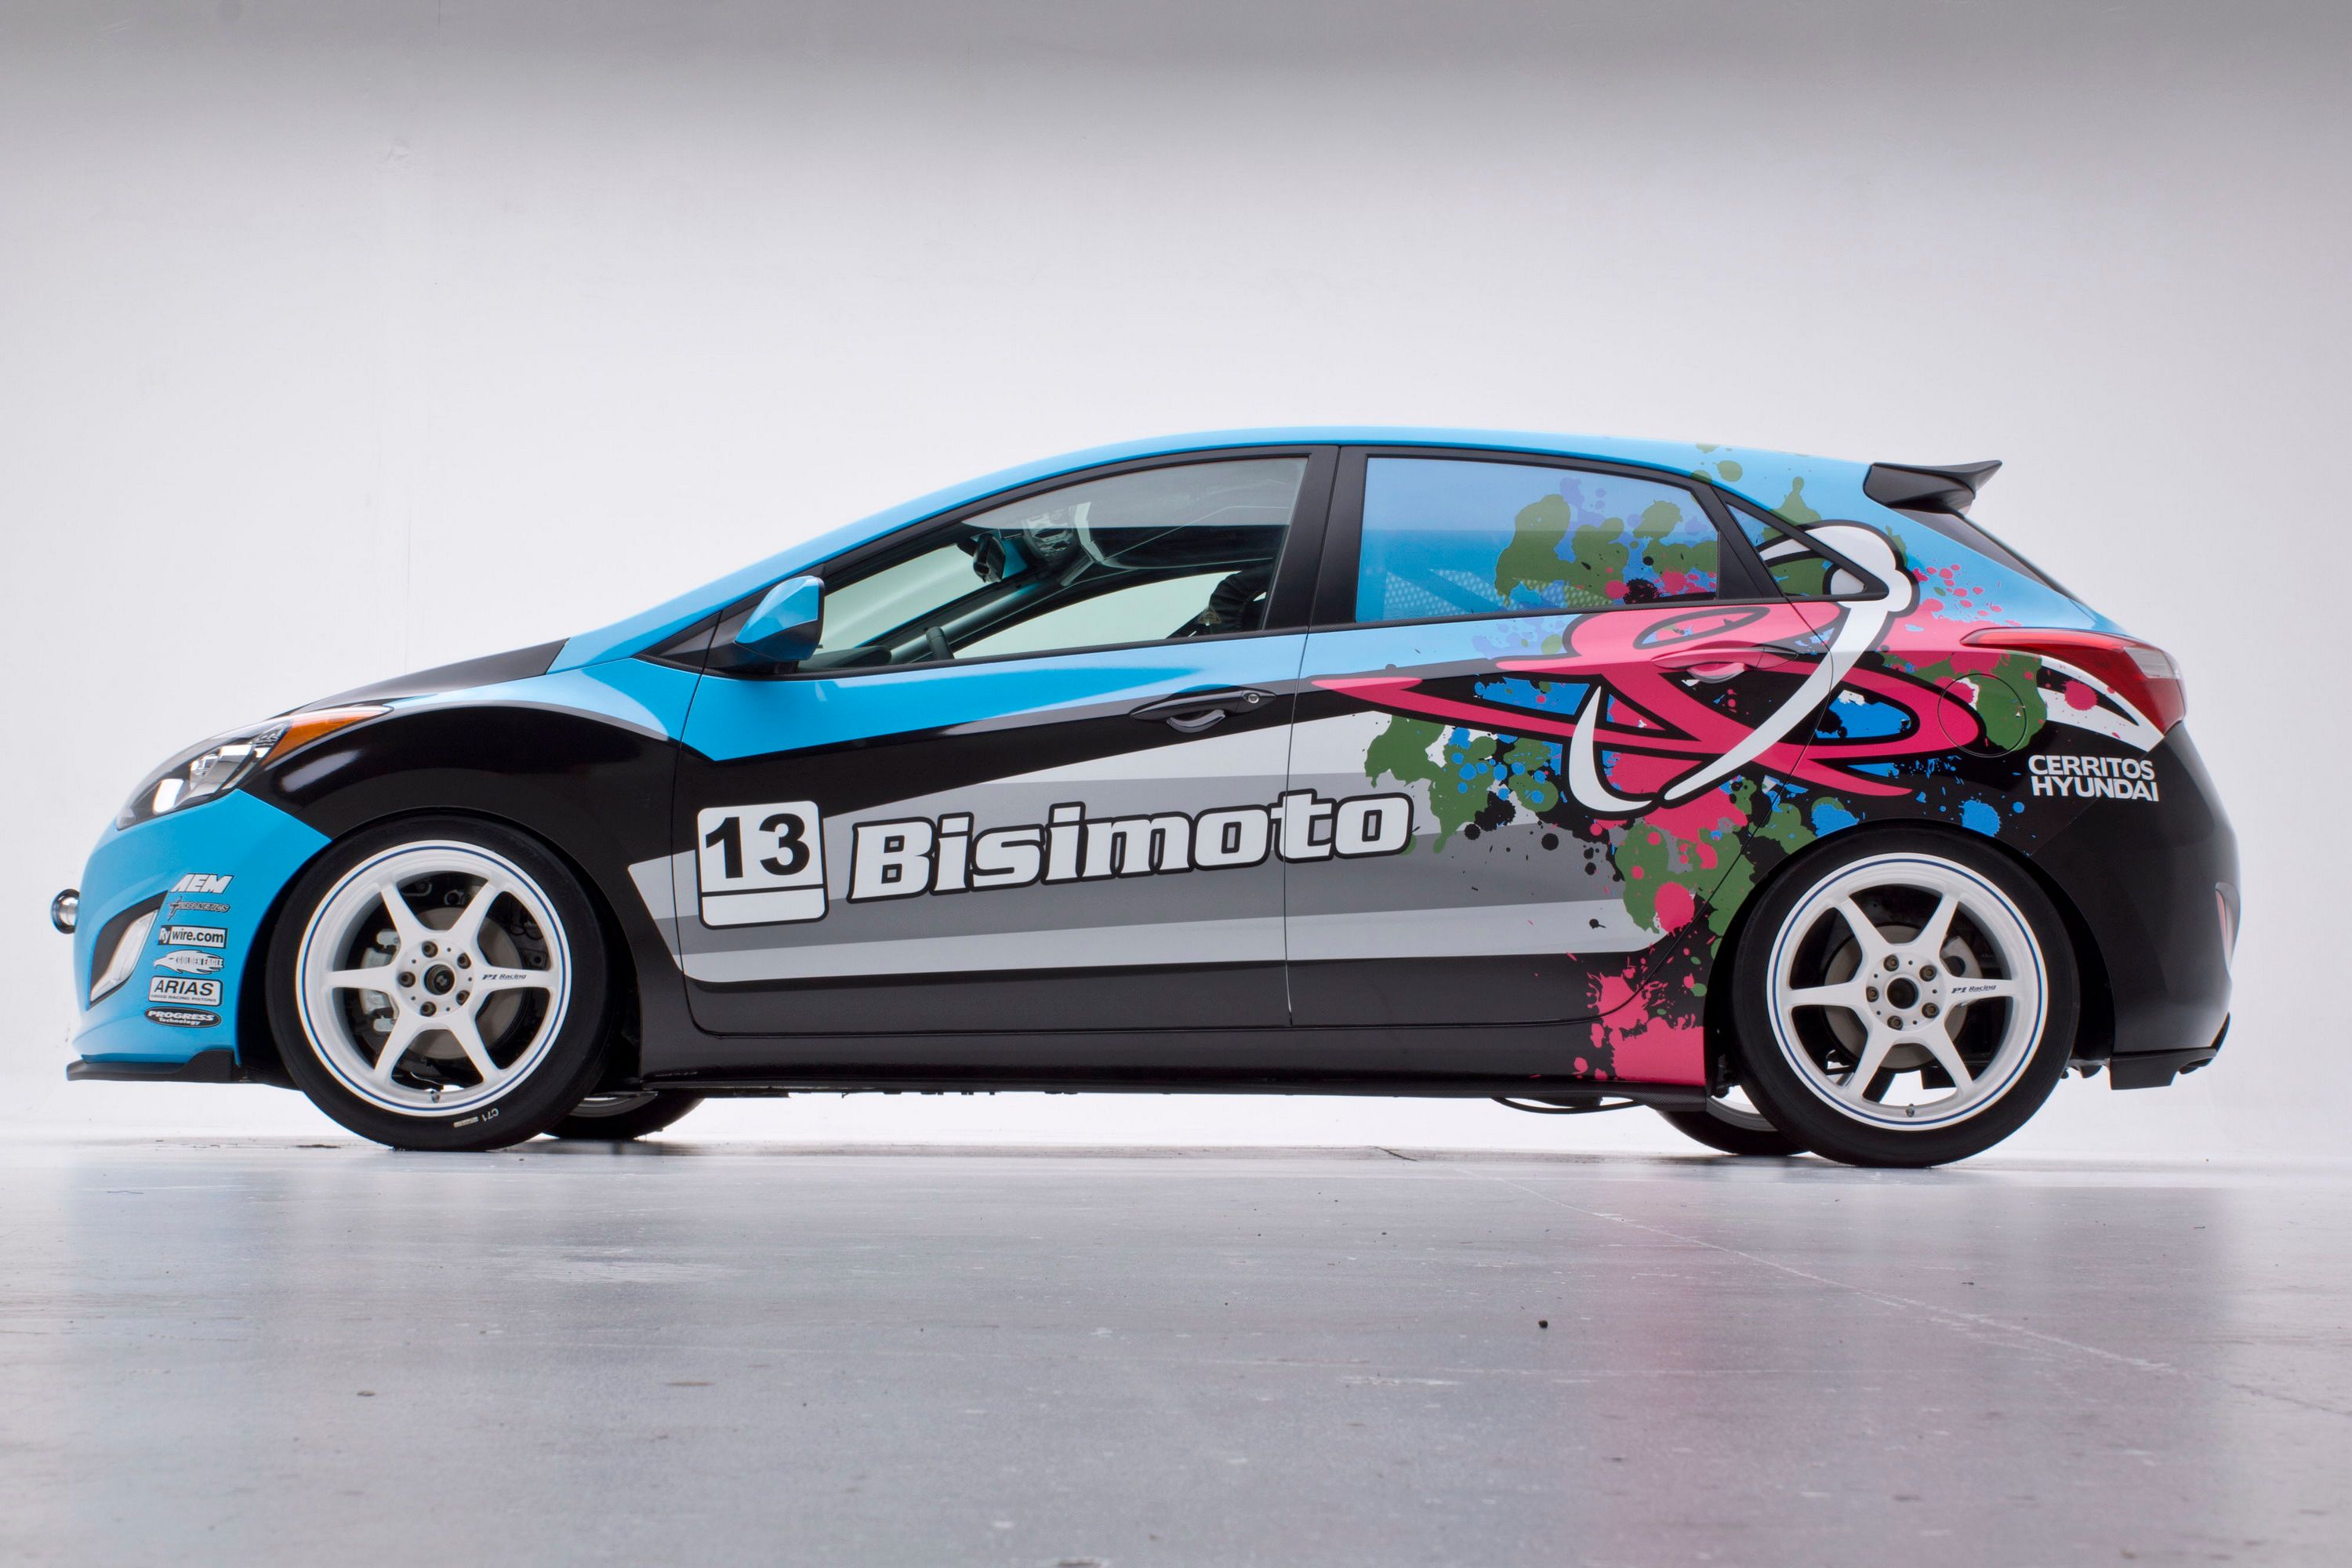 2012 Hyundai Elantra GT Concept by Bisimoto Engineering